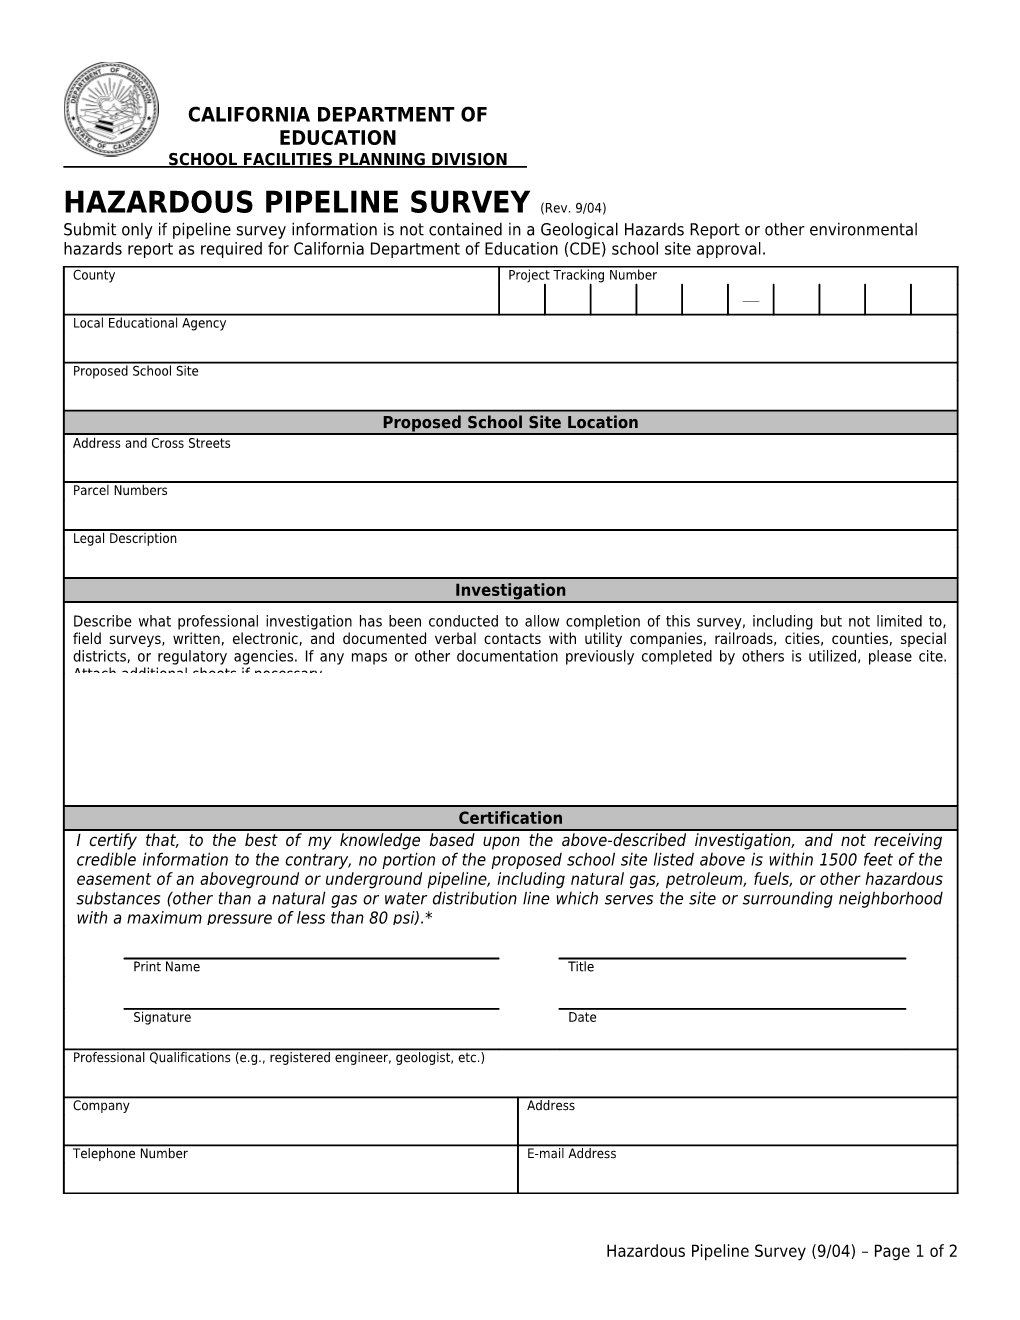 Hazardous Pipeline Survey - School Facility (CA Dept of Education)